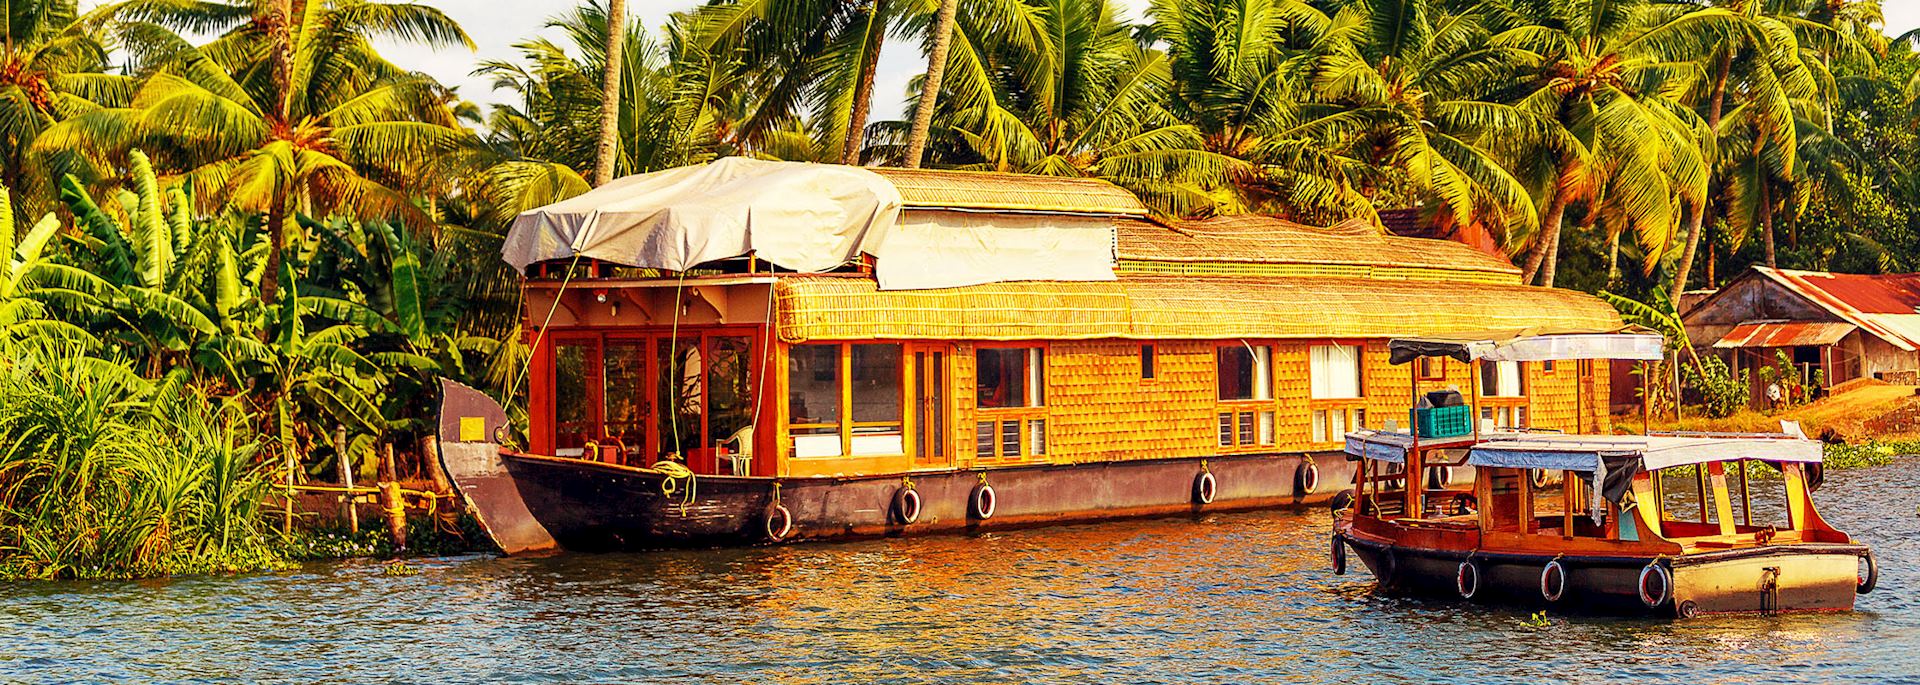 Indian houseboat